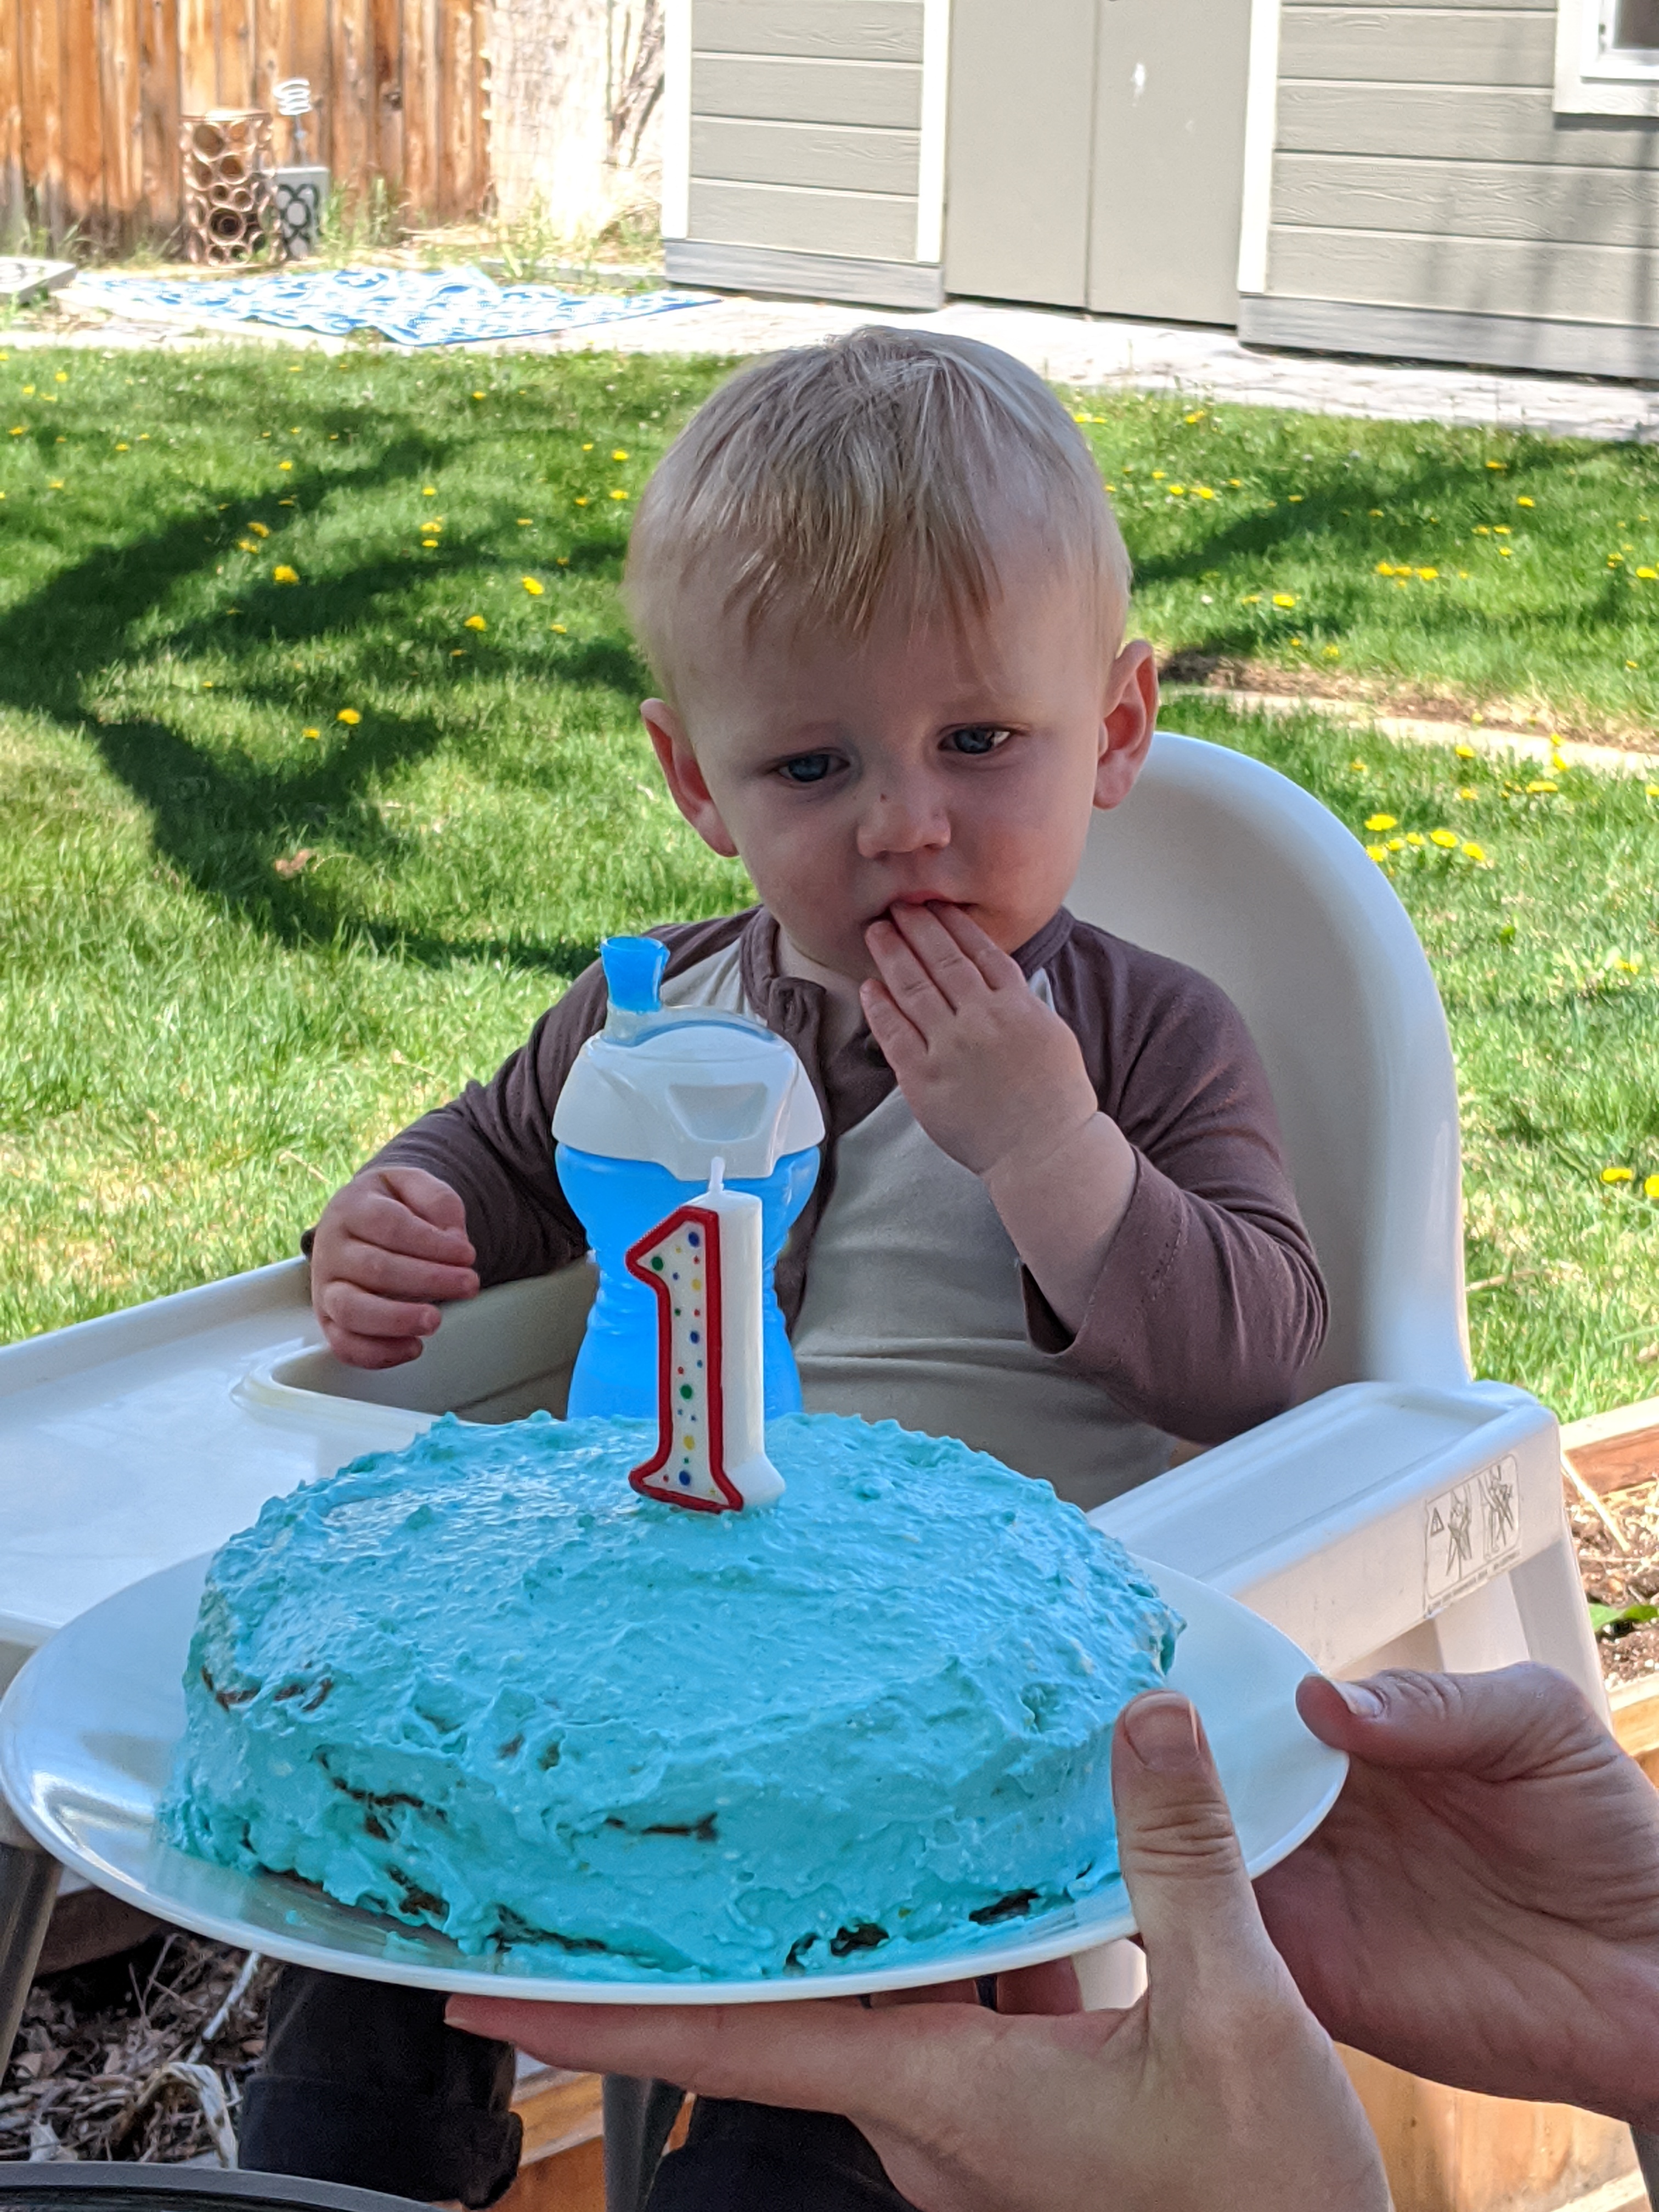 Owen eats cake on his birthday.